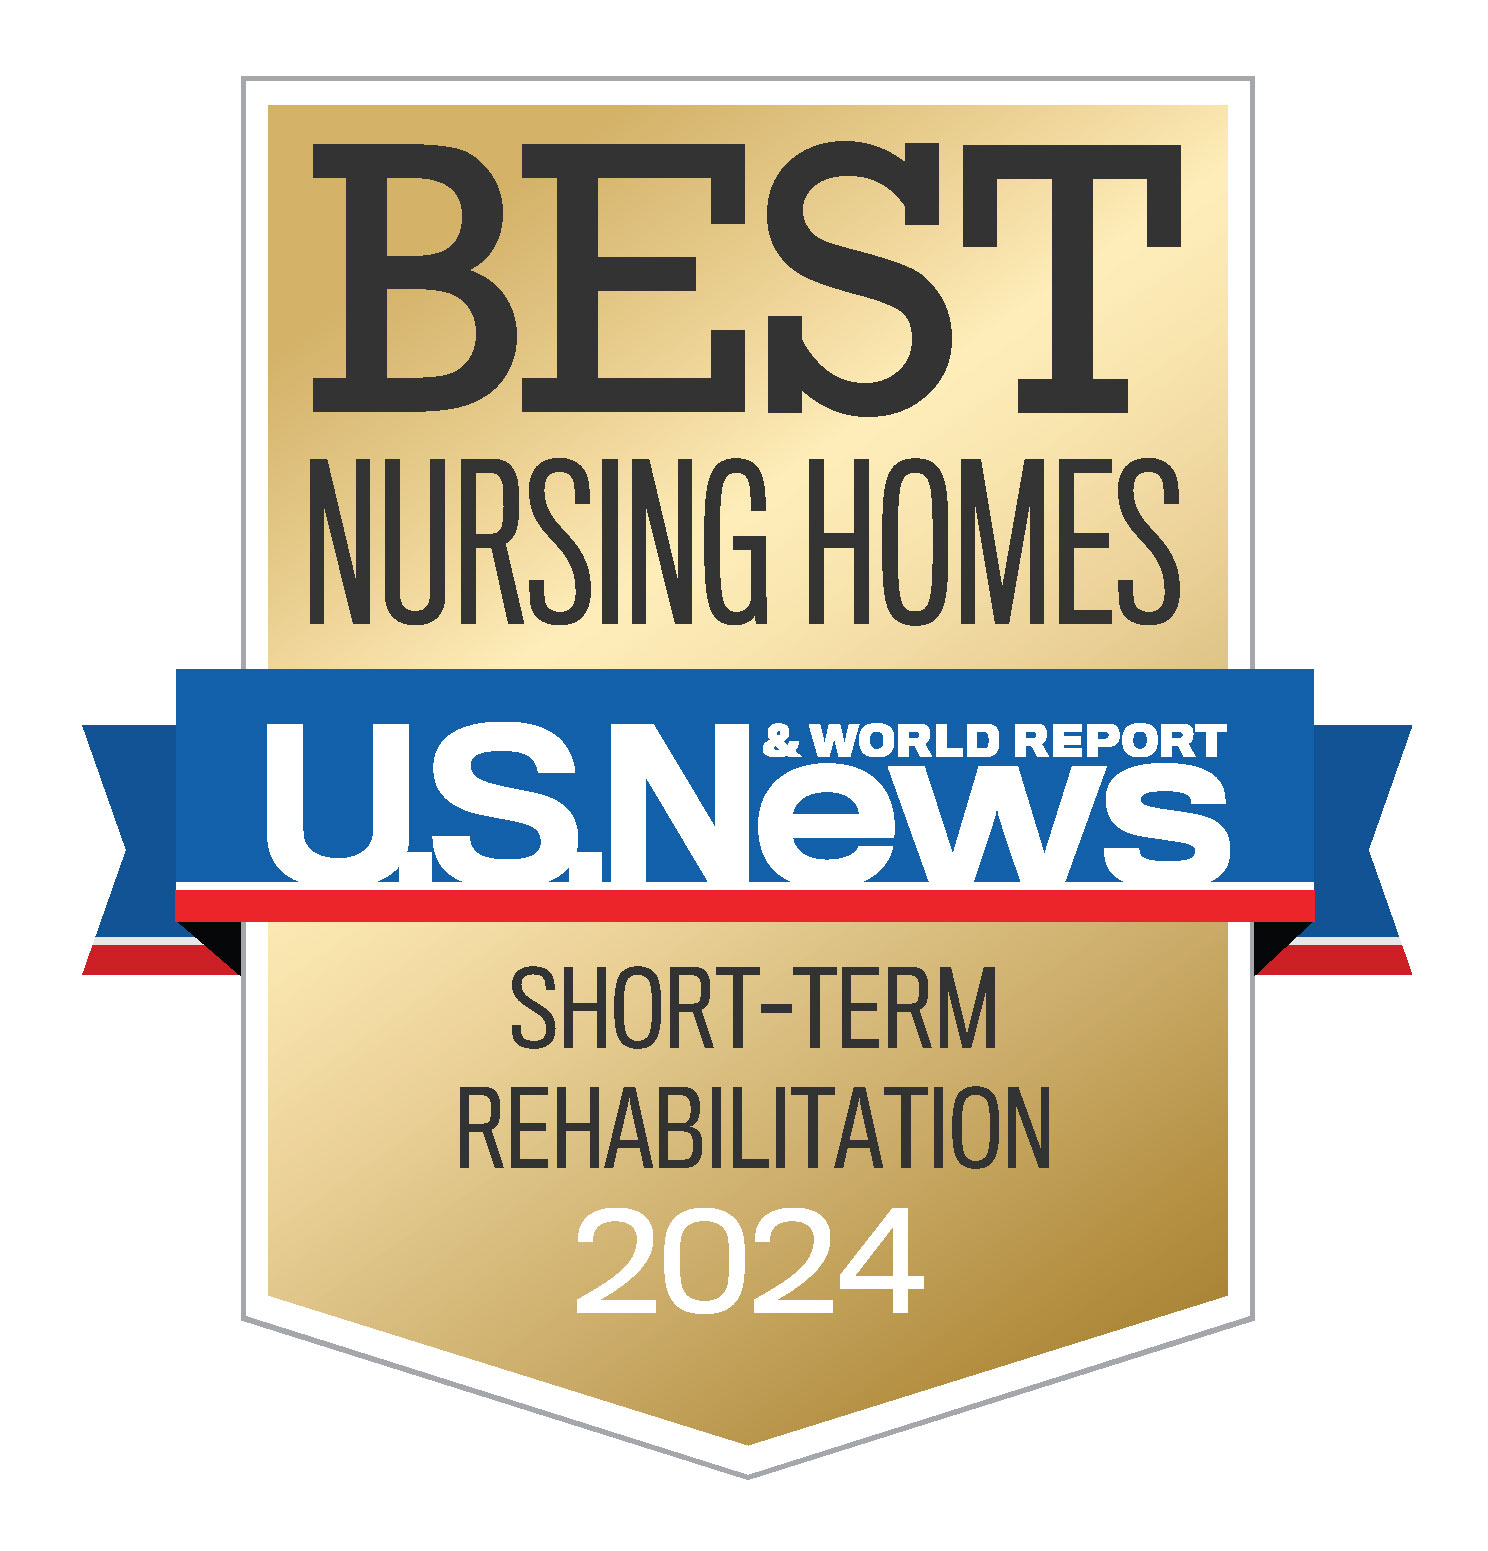 US News and World Report 2024 Award for Best Nursing Homes Short-Term Rehabilitation